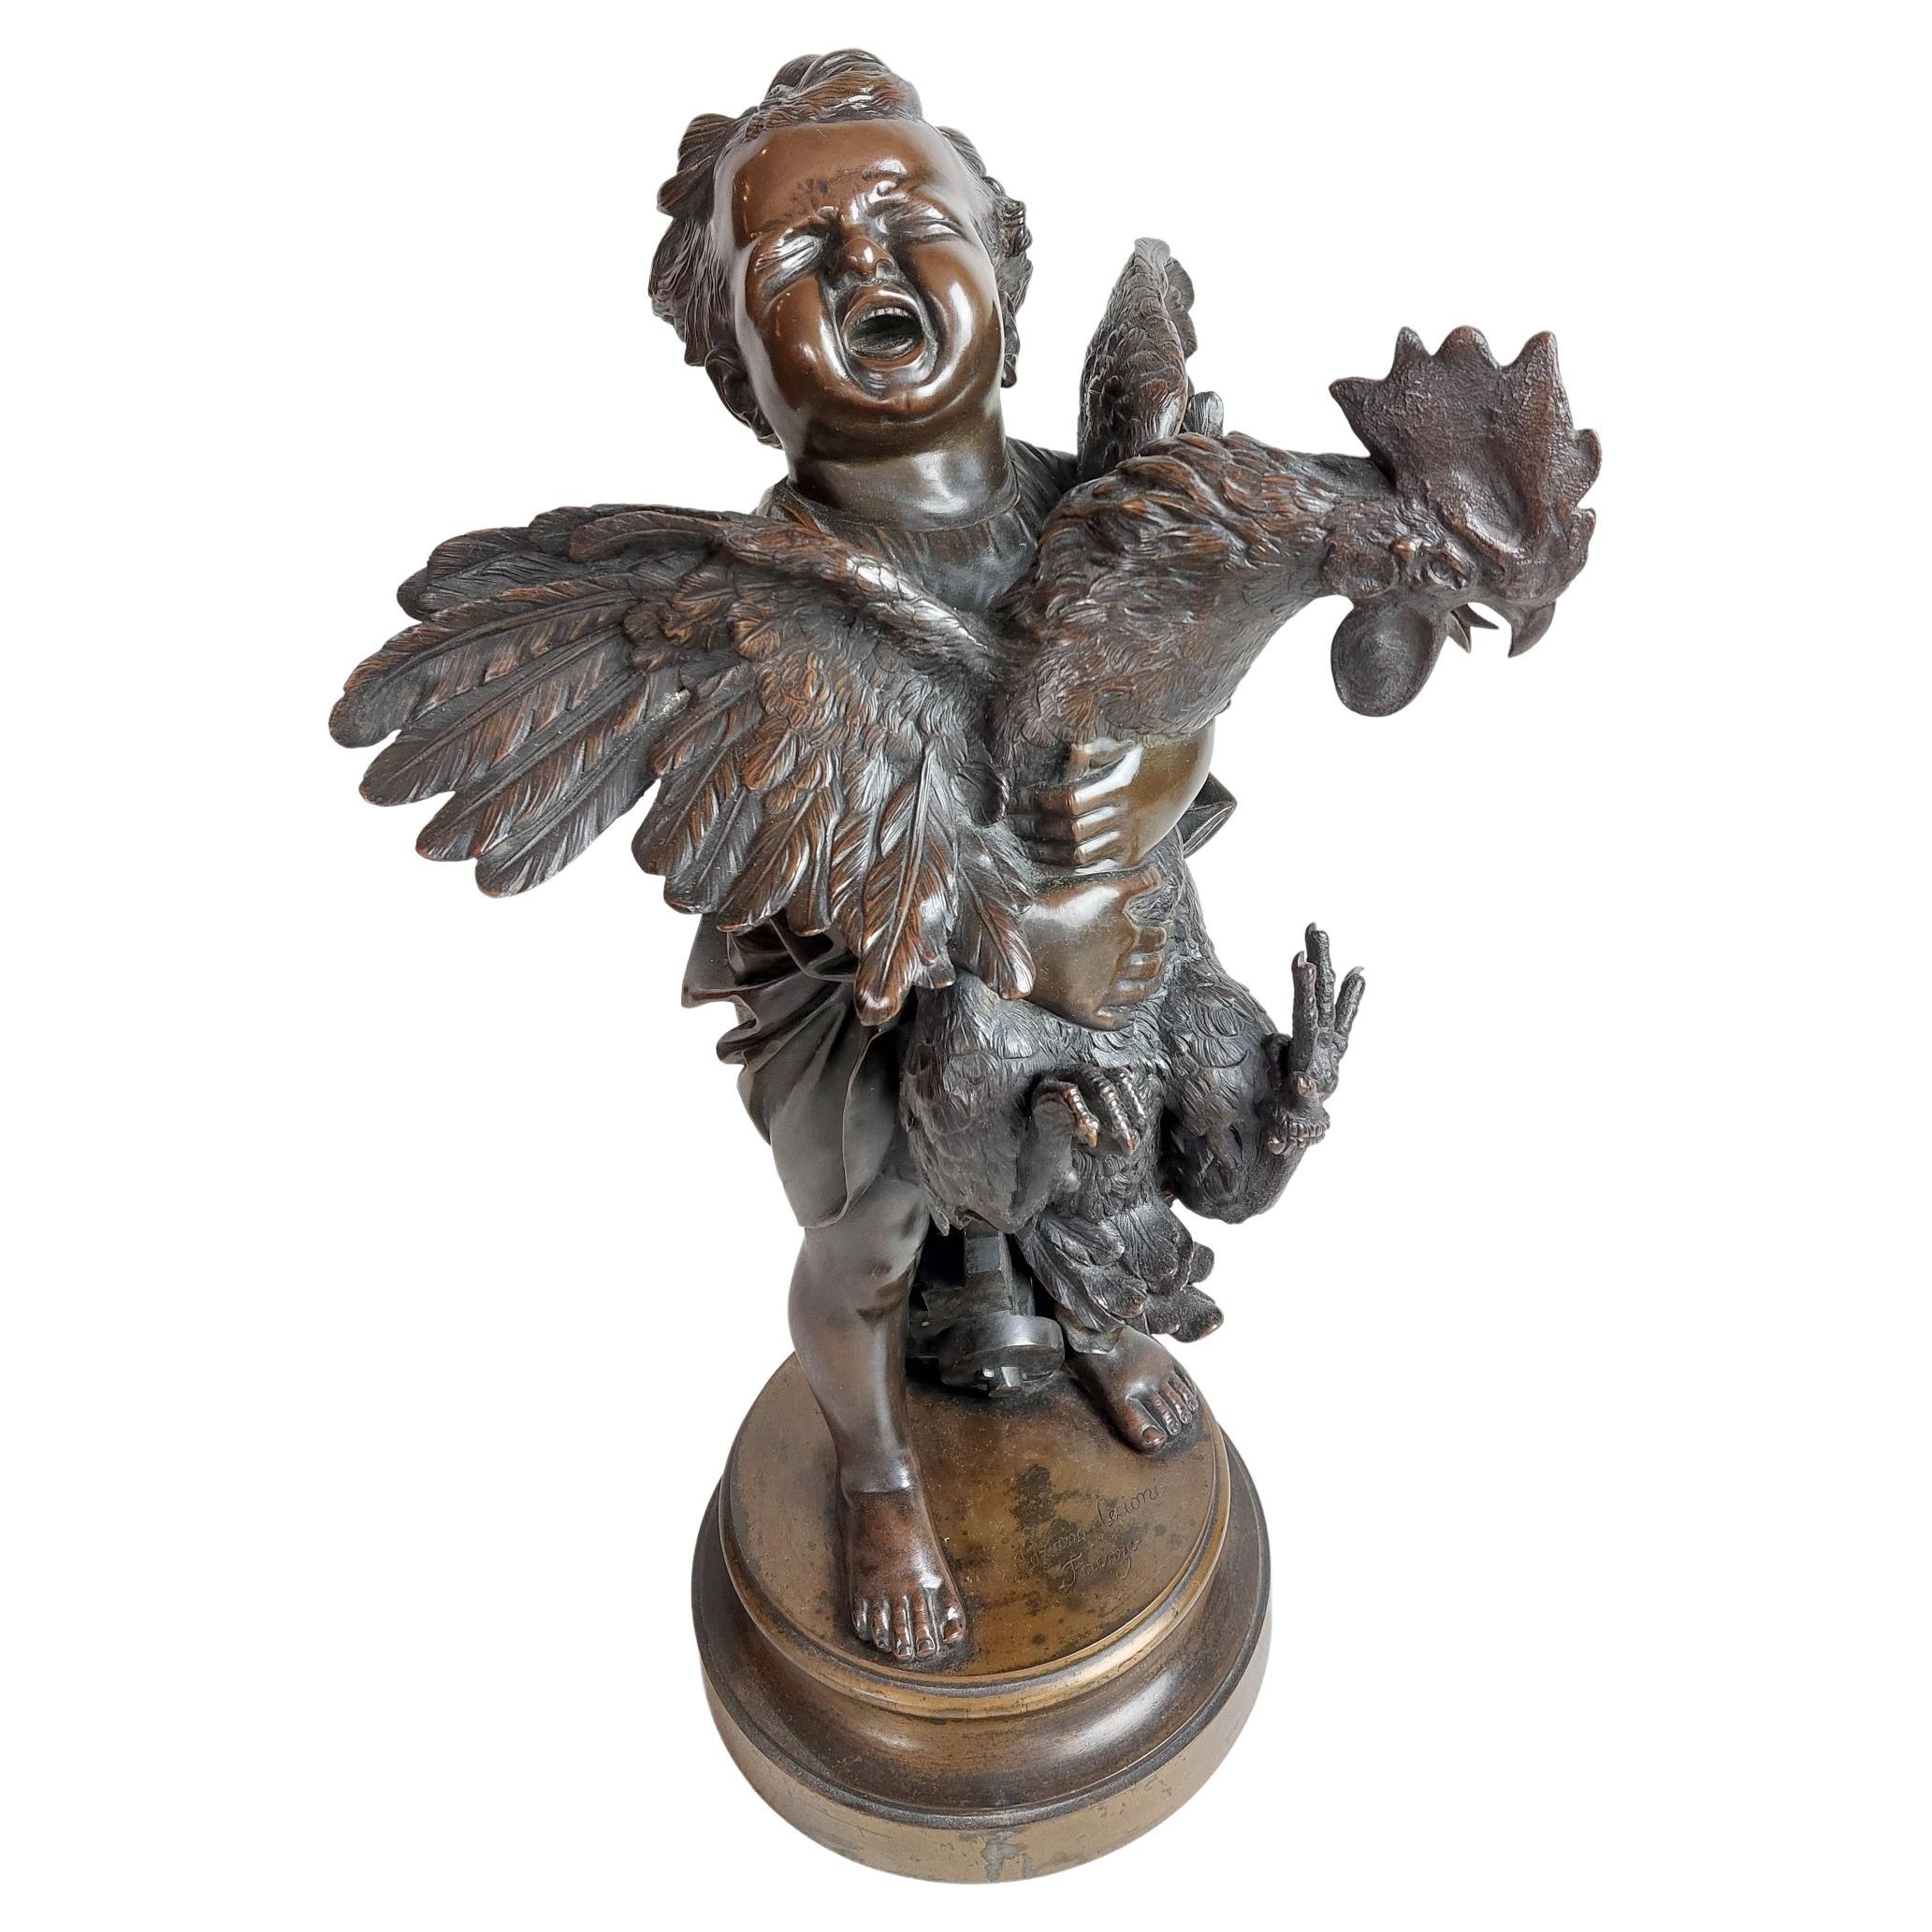 Amusing 19th Century Italian Bronze of a Screaming Baby Holding a Cockerel